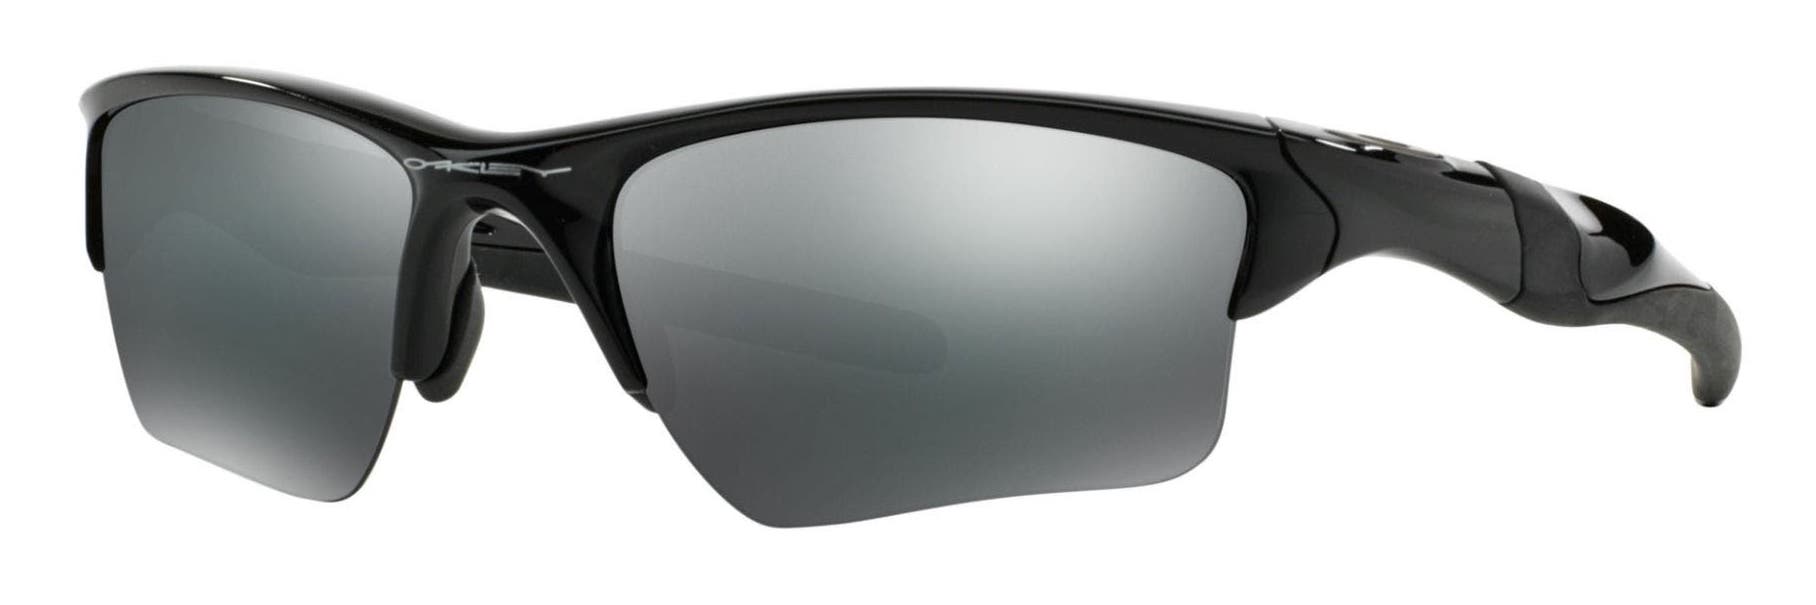 Oakley Half Jacket 2.0 XL sunglasses in black with black iridium lenses.